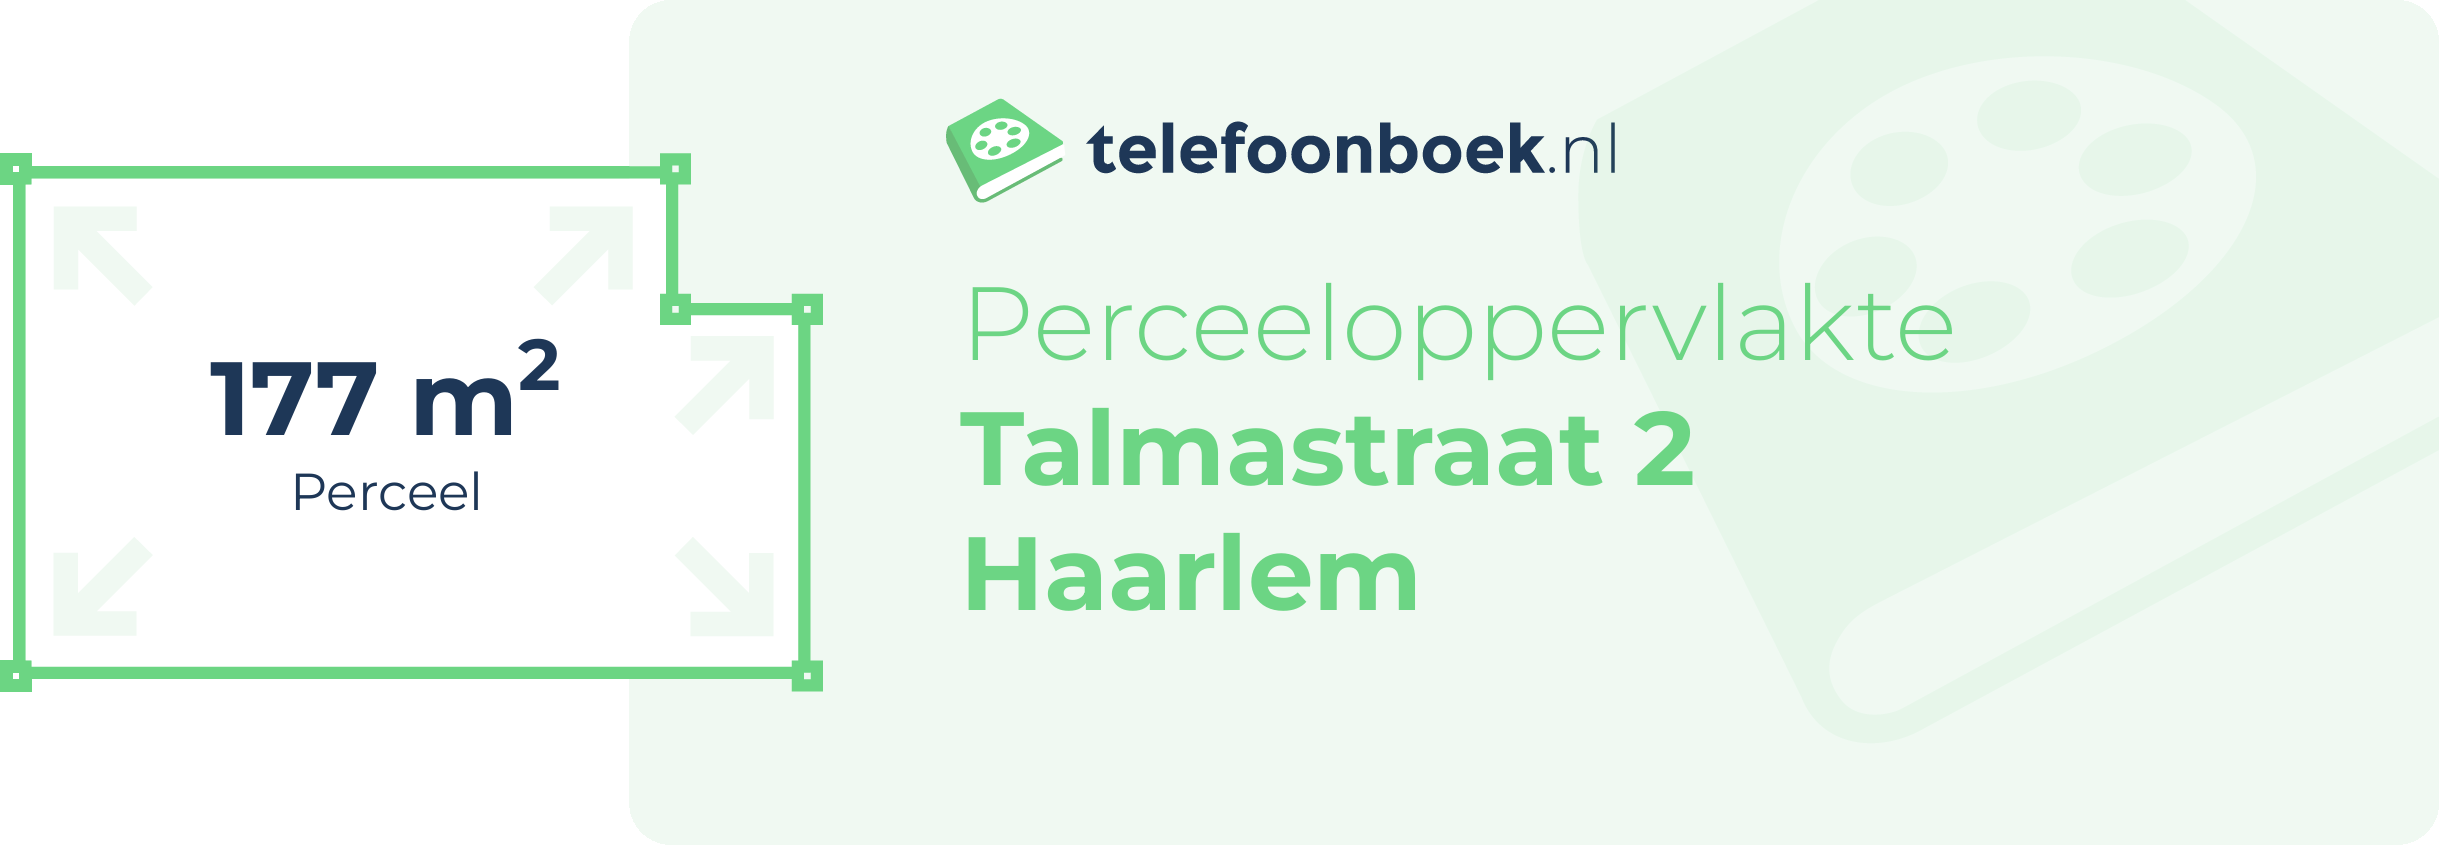 Perceeloppervlakte Talmastraat 2 Haarlem